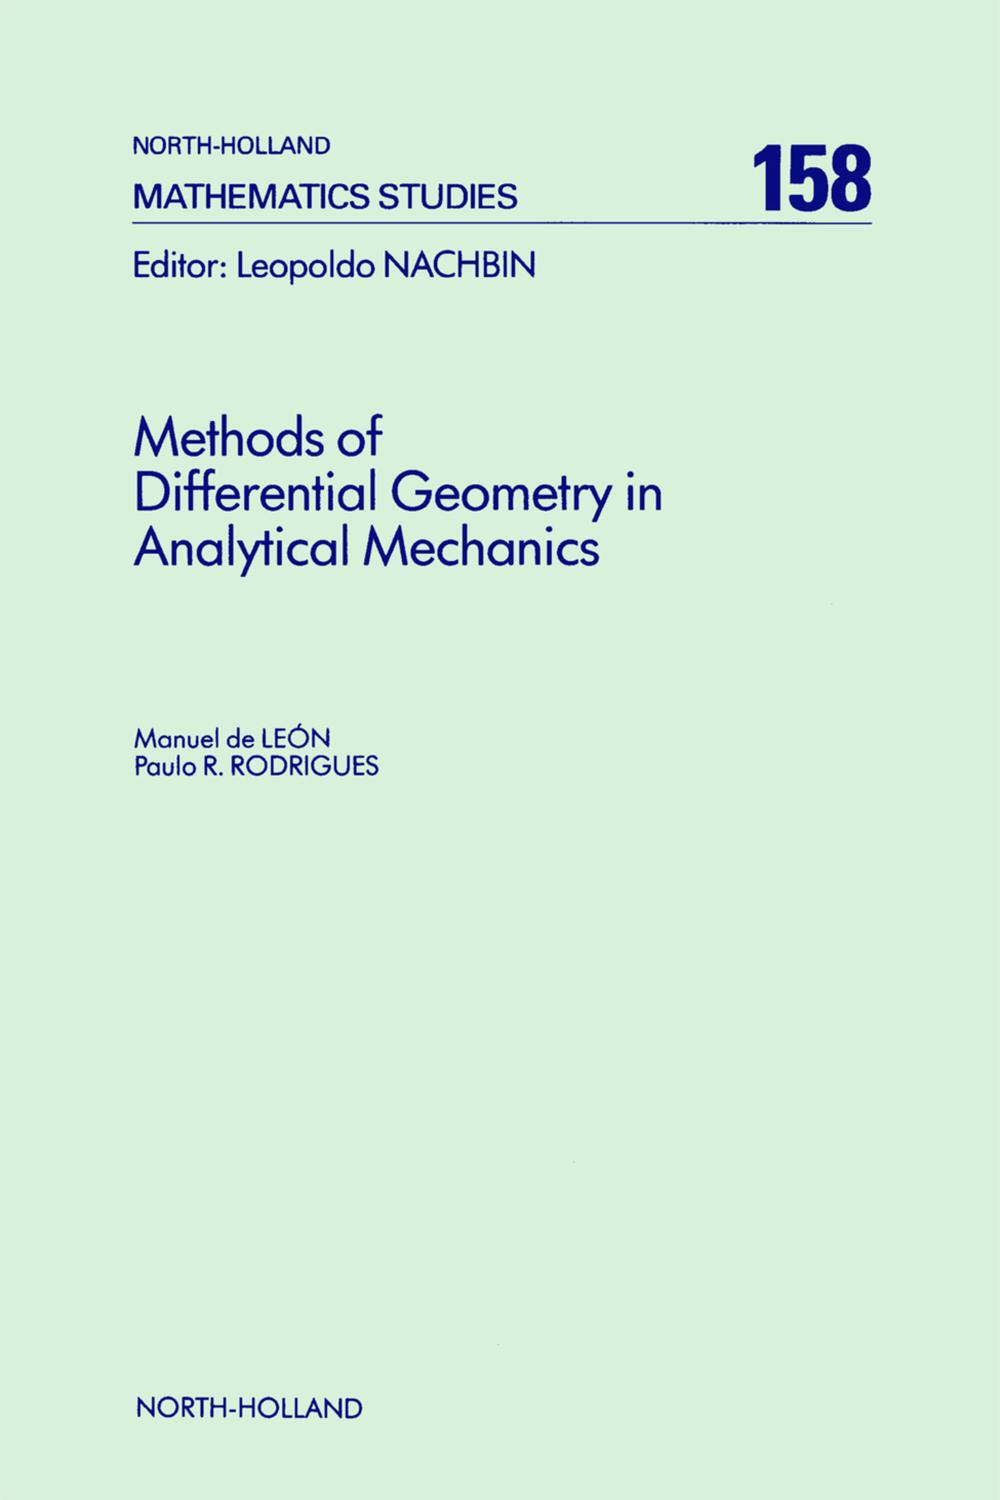 Methods of Differential Geometry in Analytical Mechanics - M. de León, P.R. Rodrigues